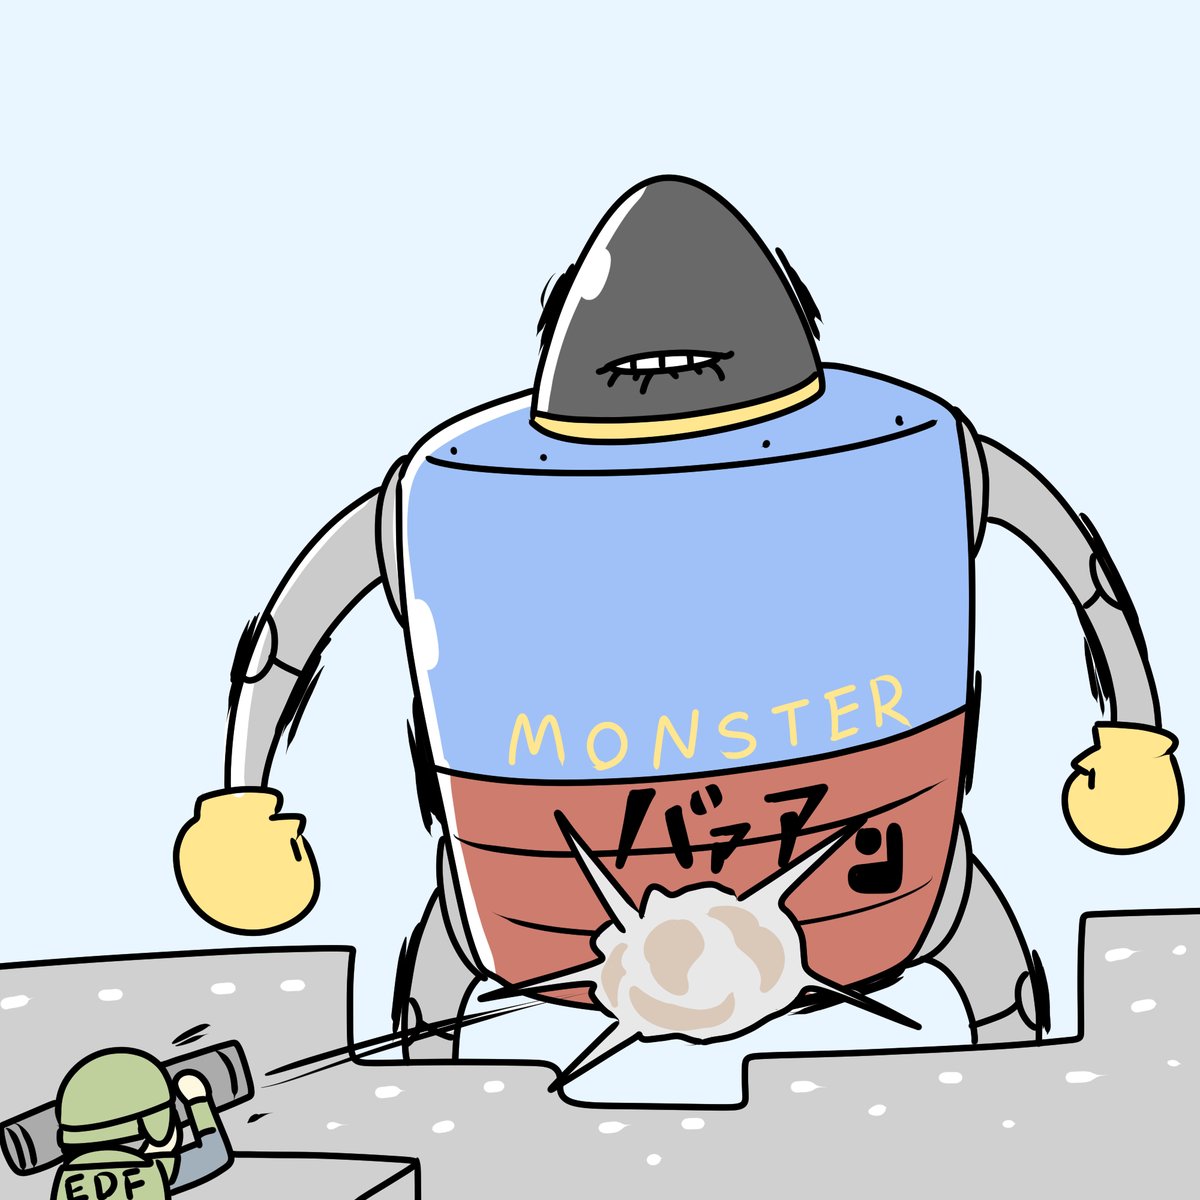 robot explosion helmet explosive weapon 1boy simple background  illustration images